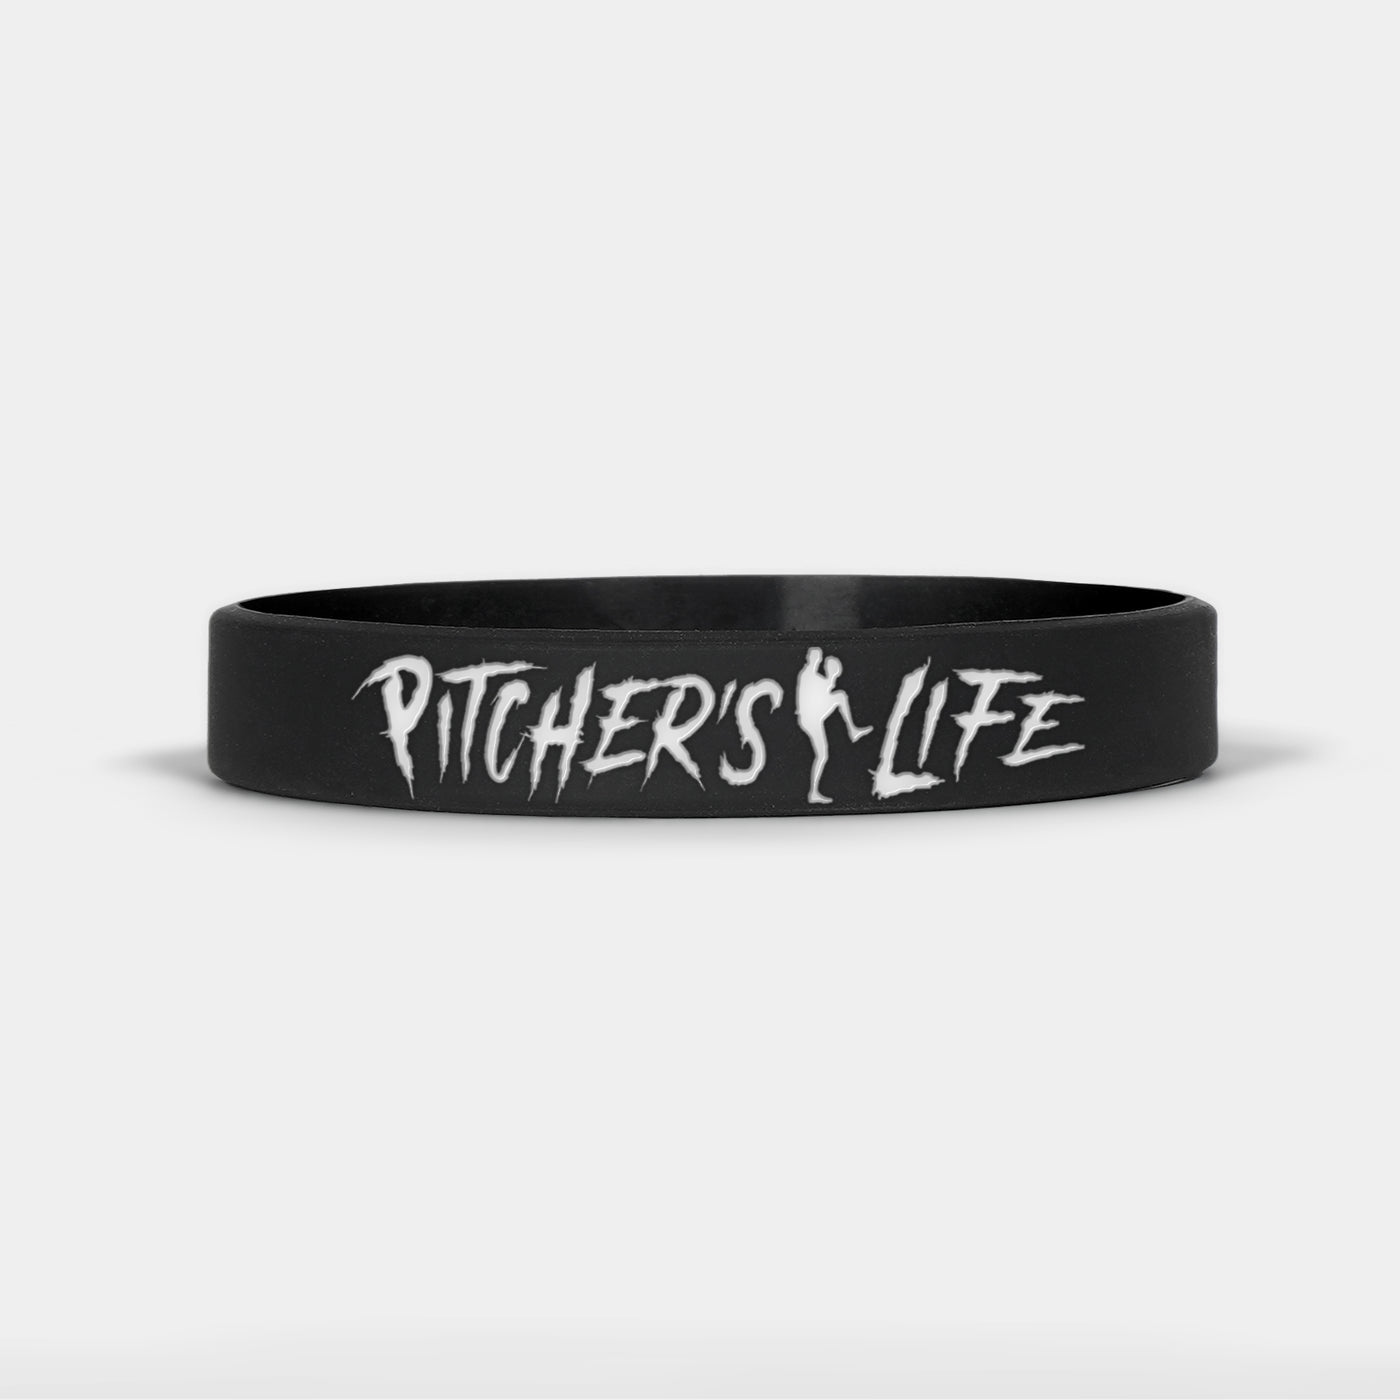 Pitcher's Life Motivational Wristband